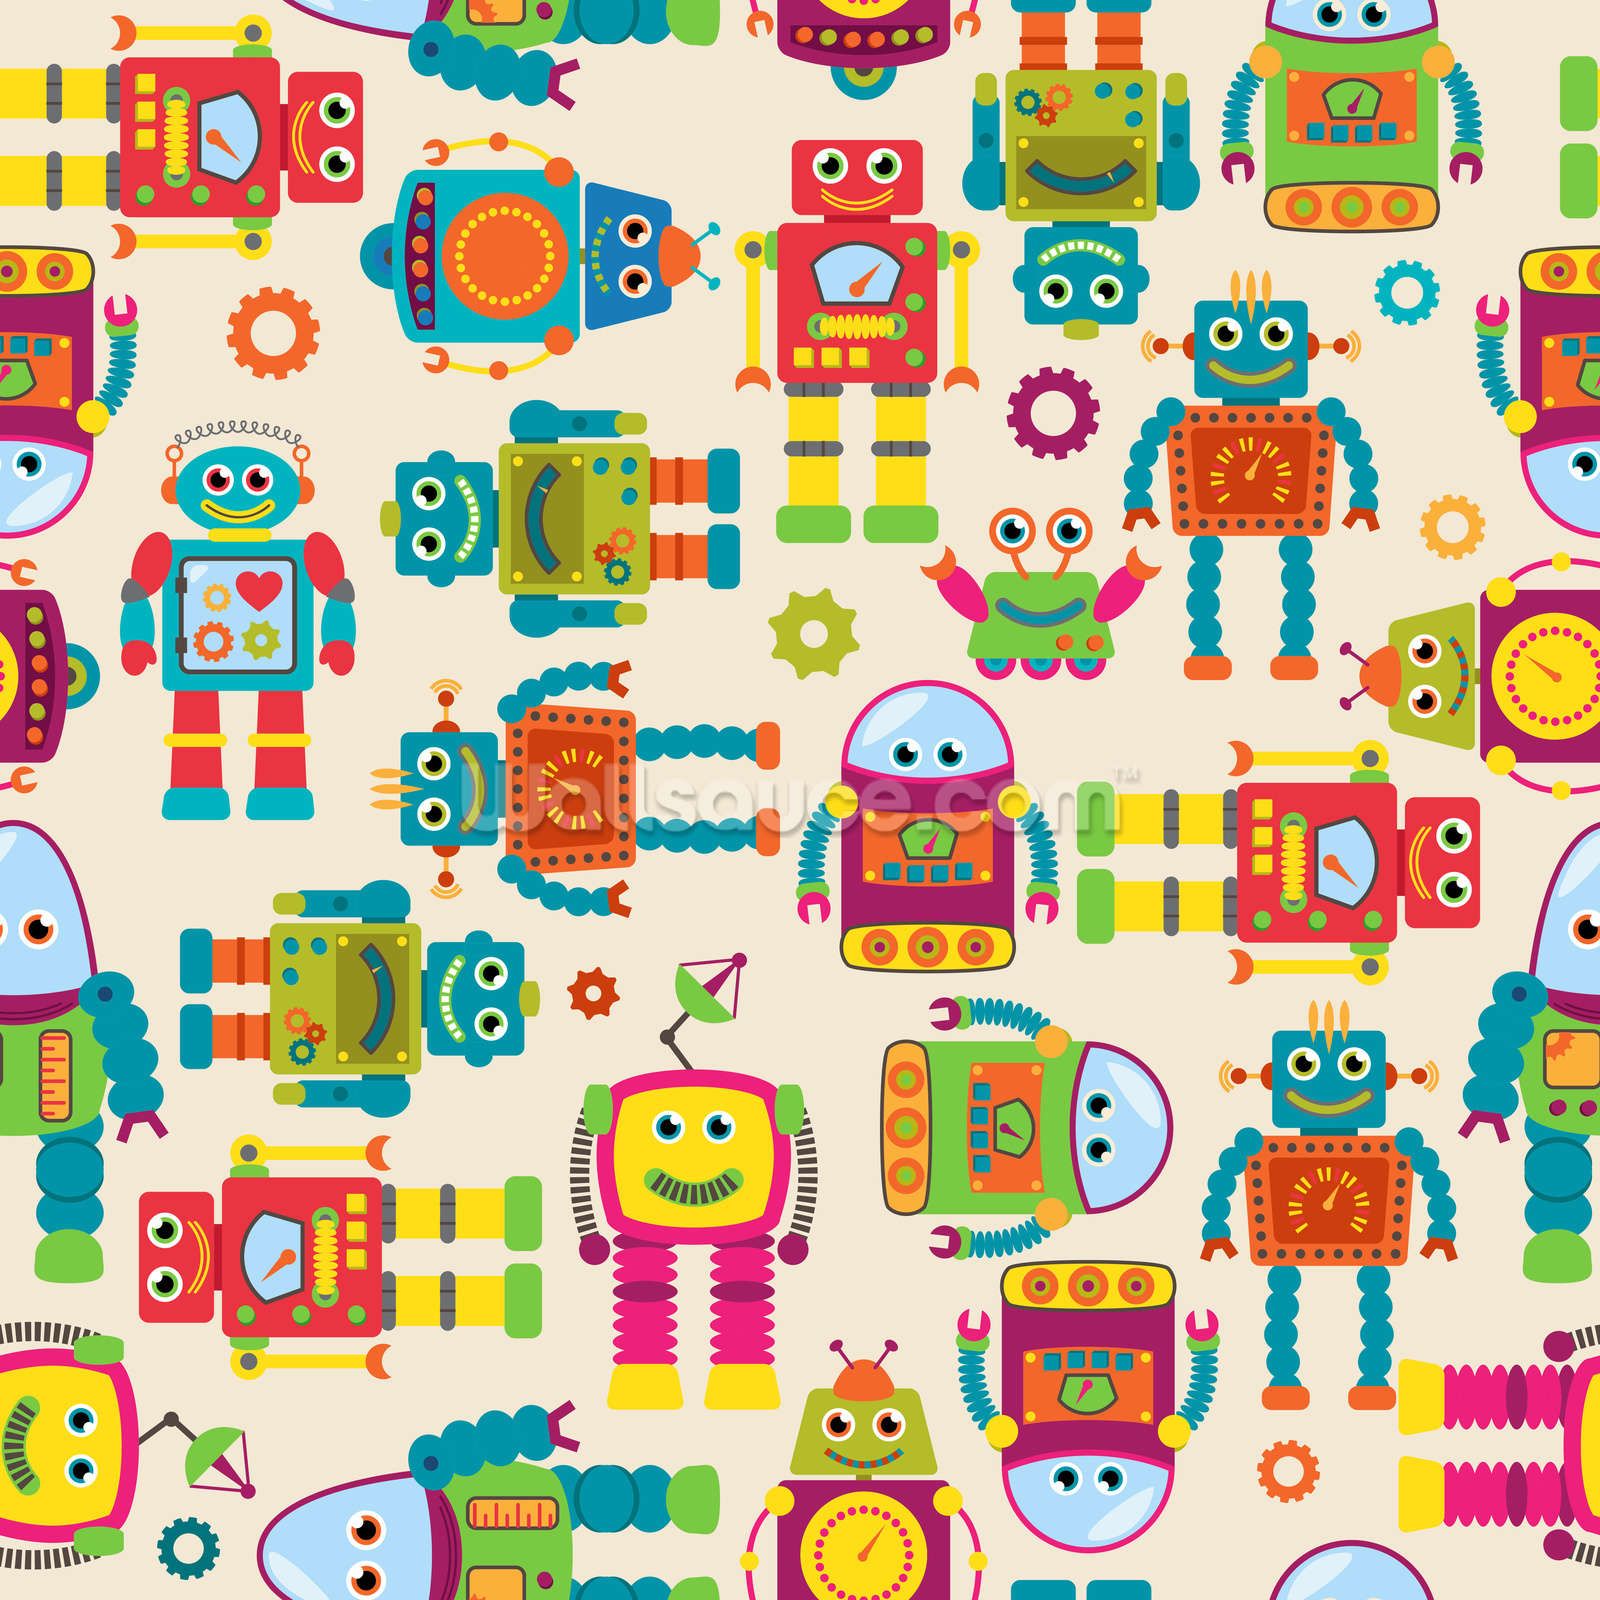 Cute Robots Wallpaper Wallsauce Us In Robot